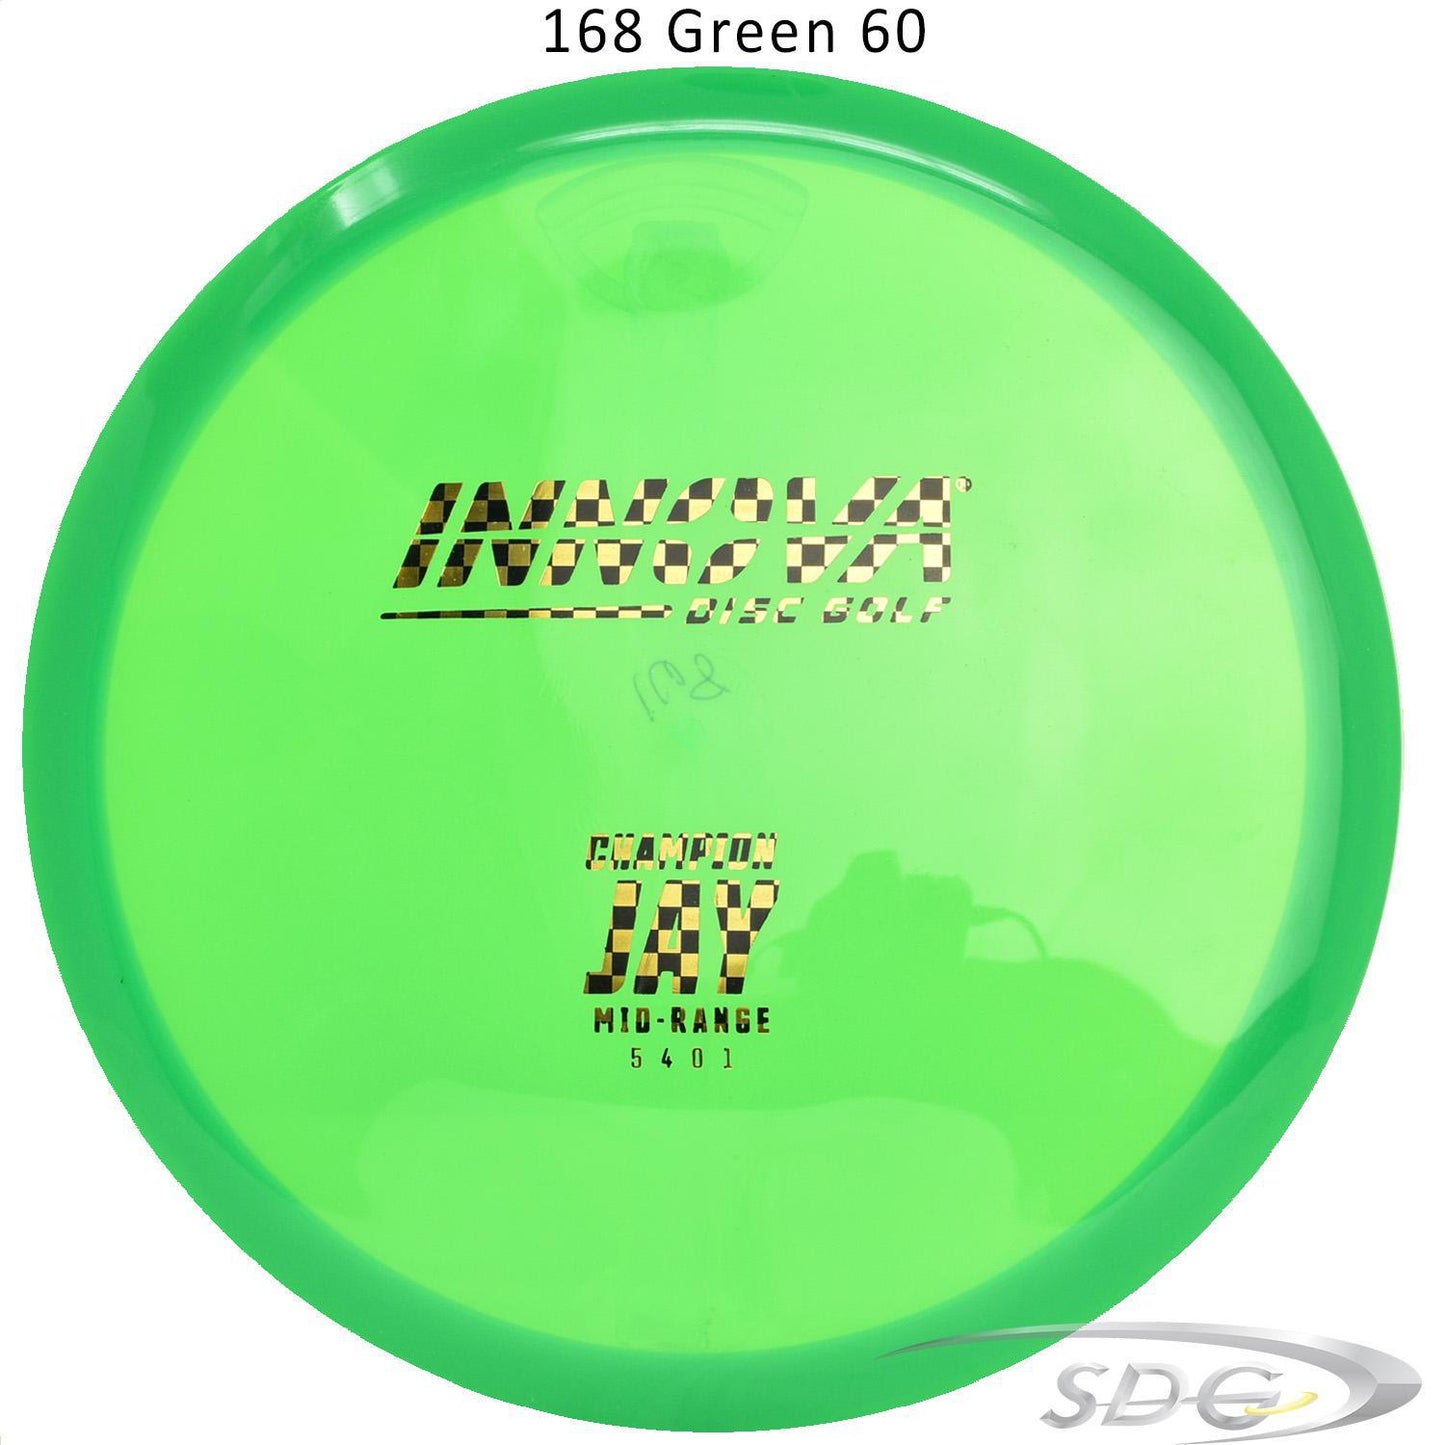 innova-champion-jay-disc-golf-mid-range 168 Green 60 